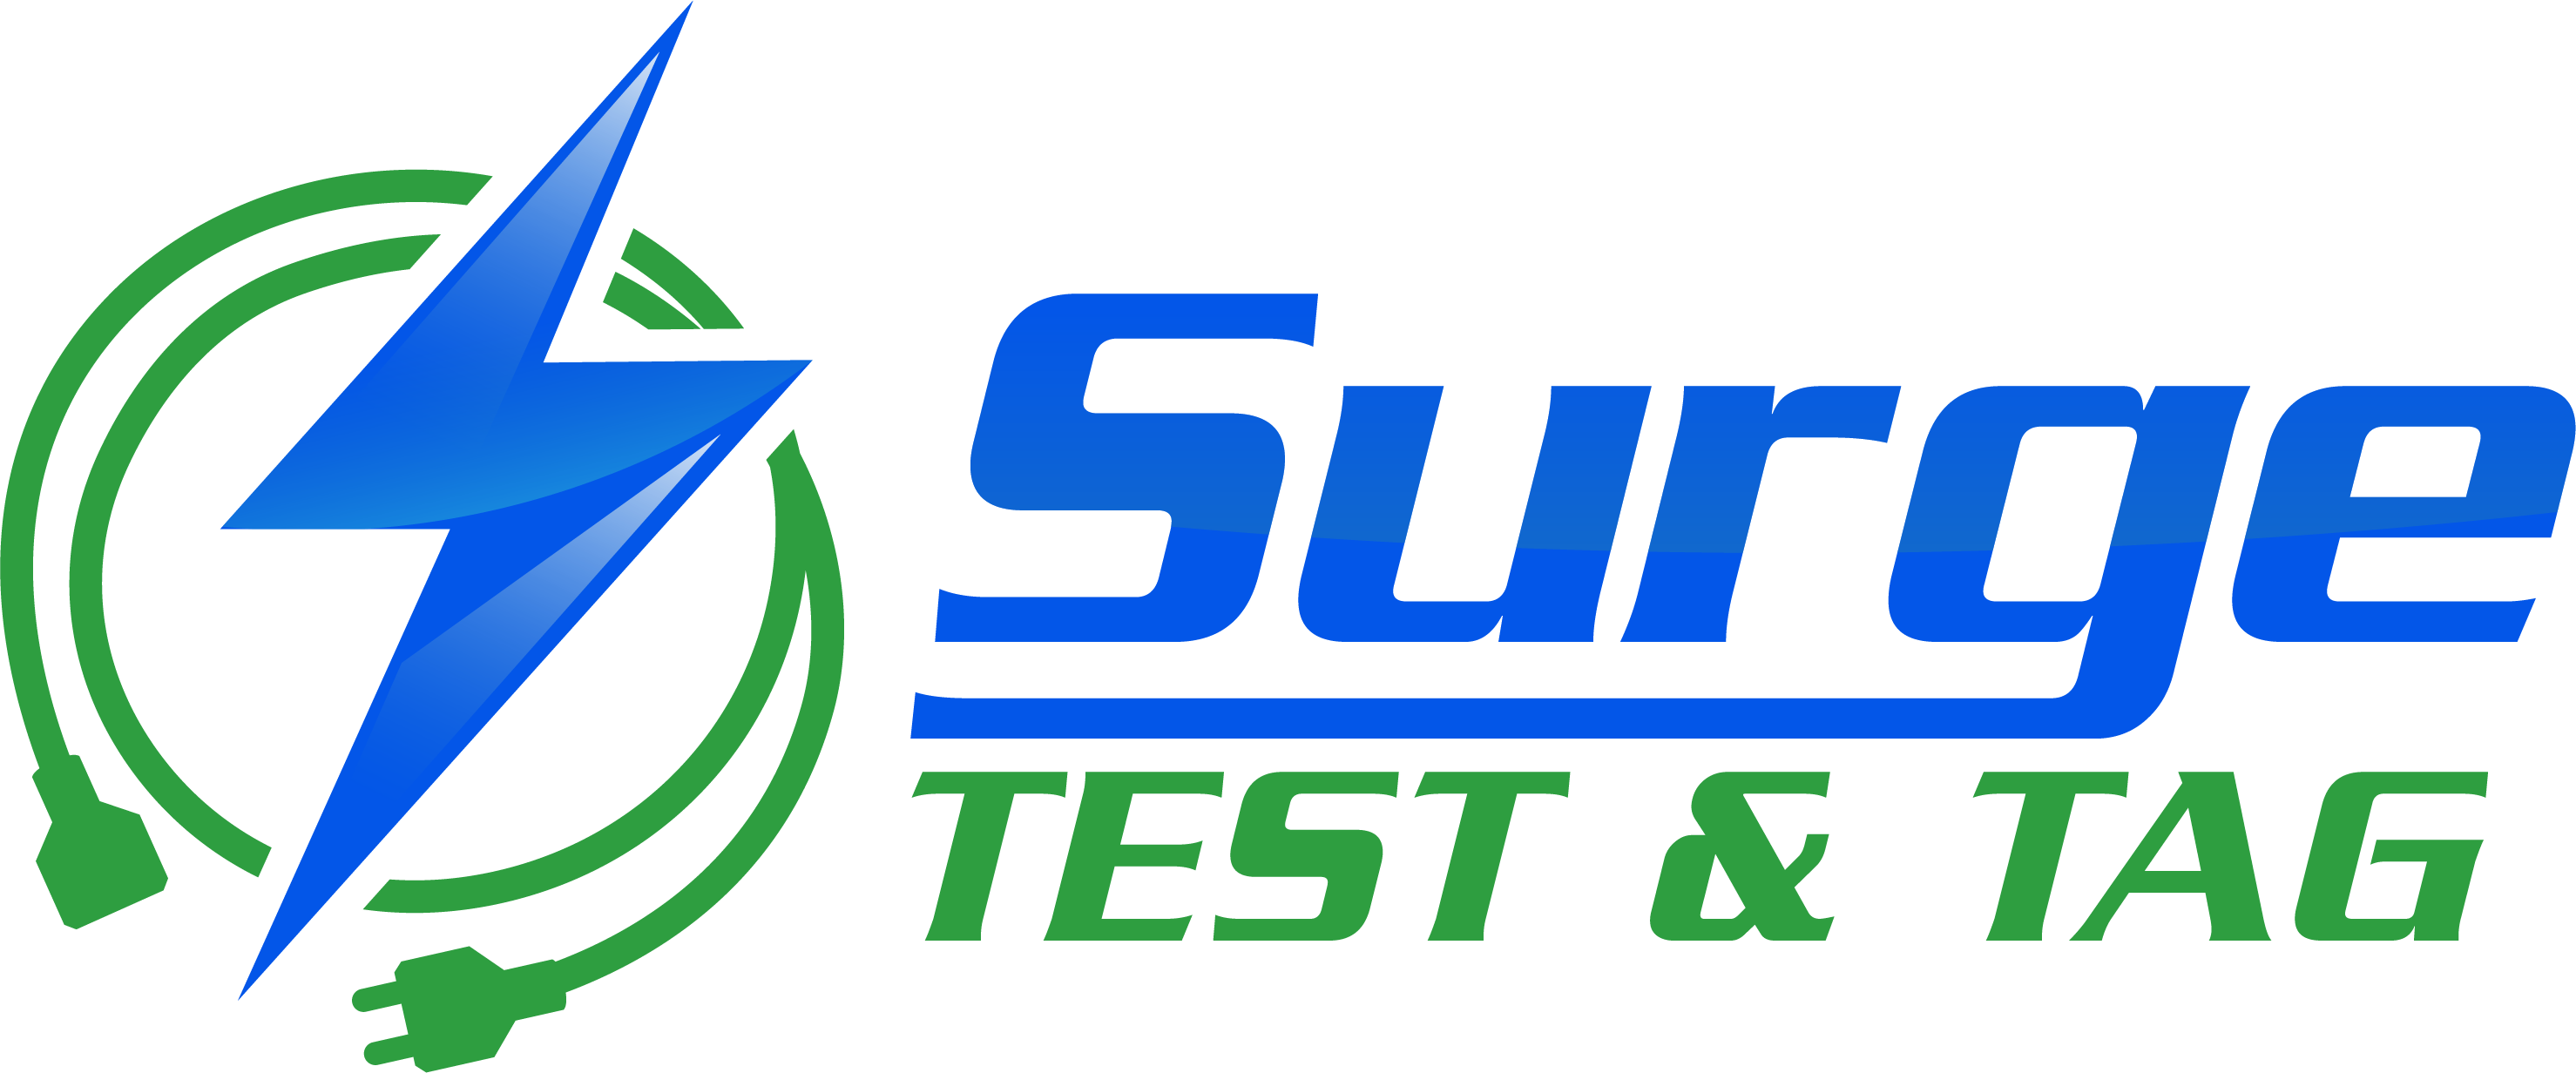 Surge Test & Tag Logo